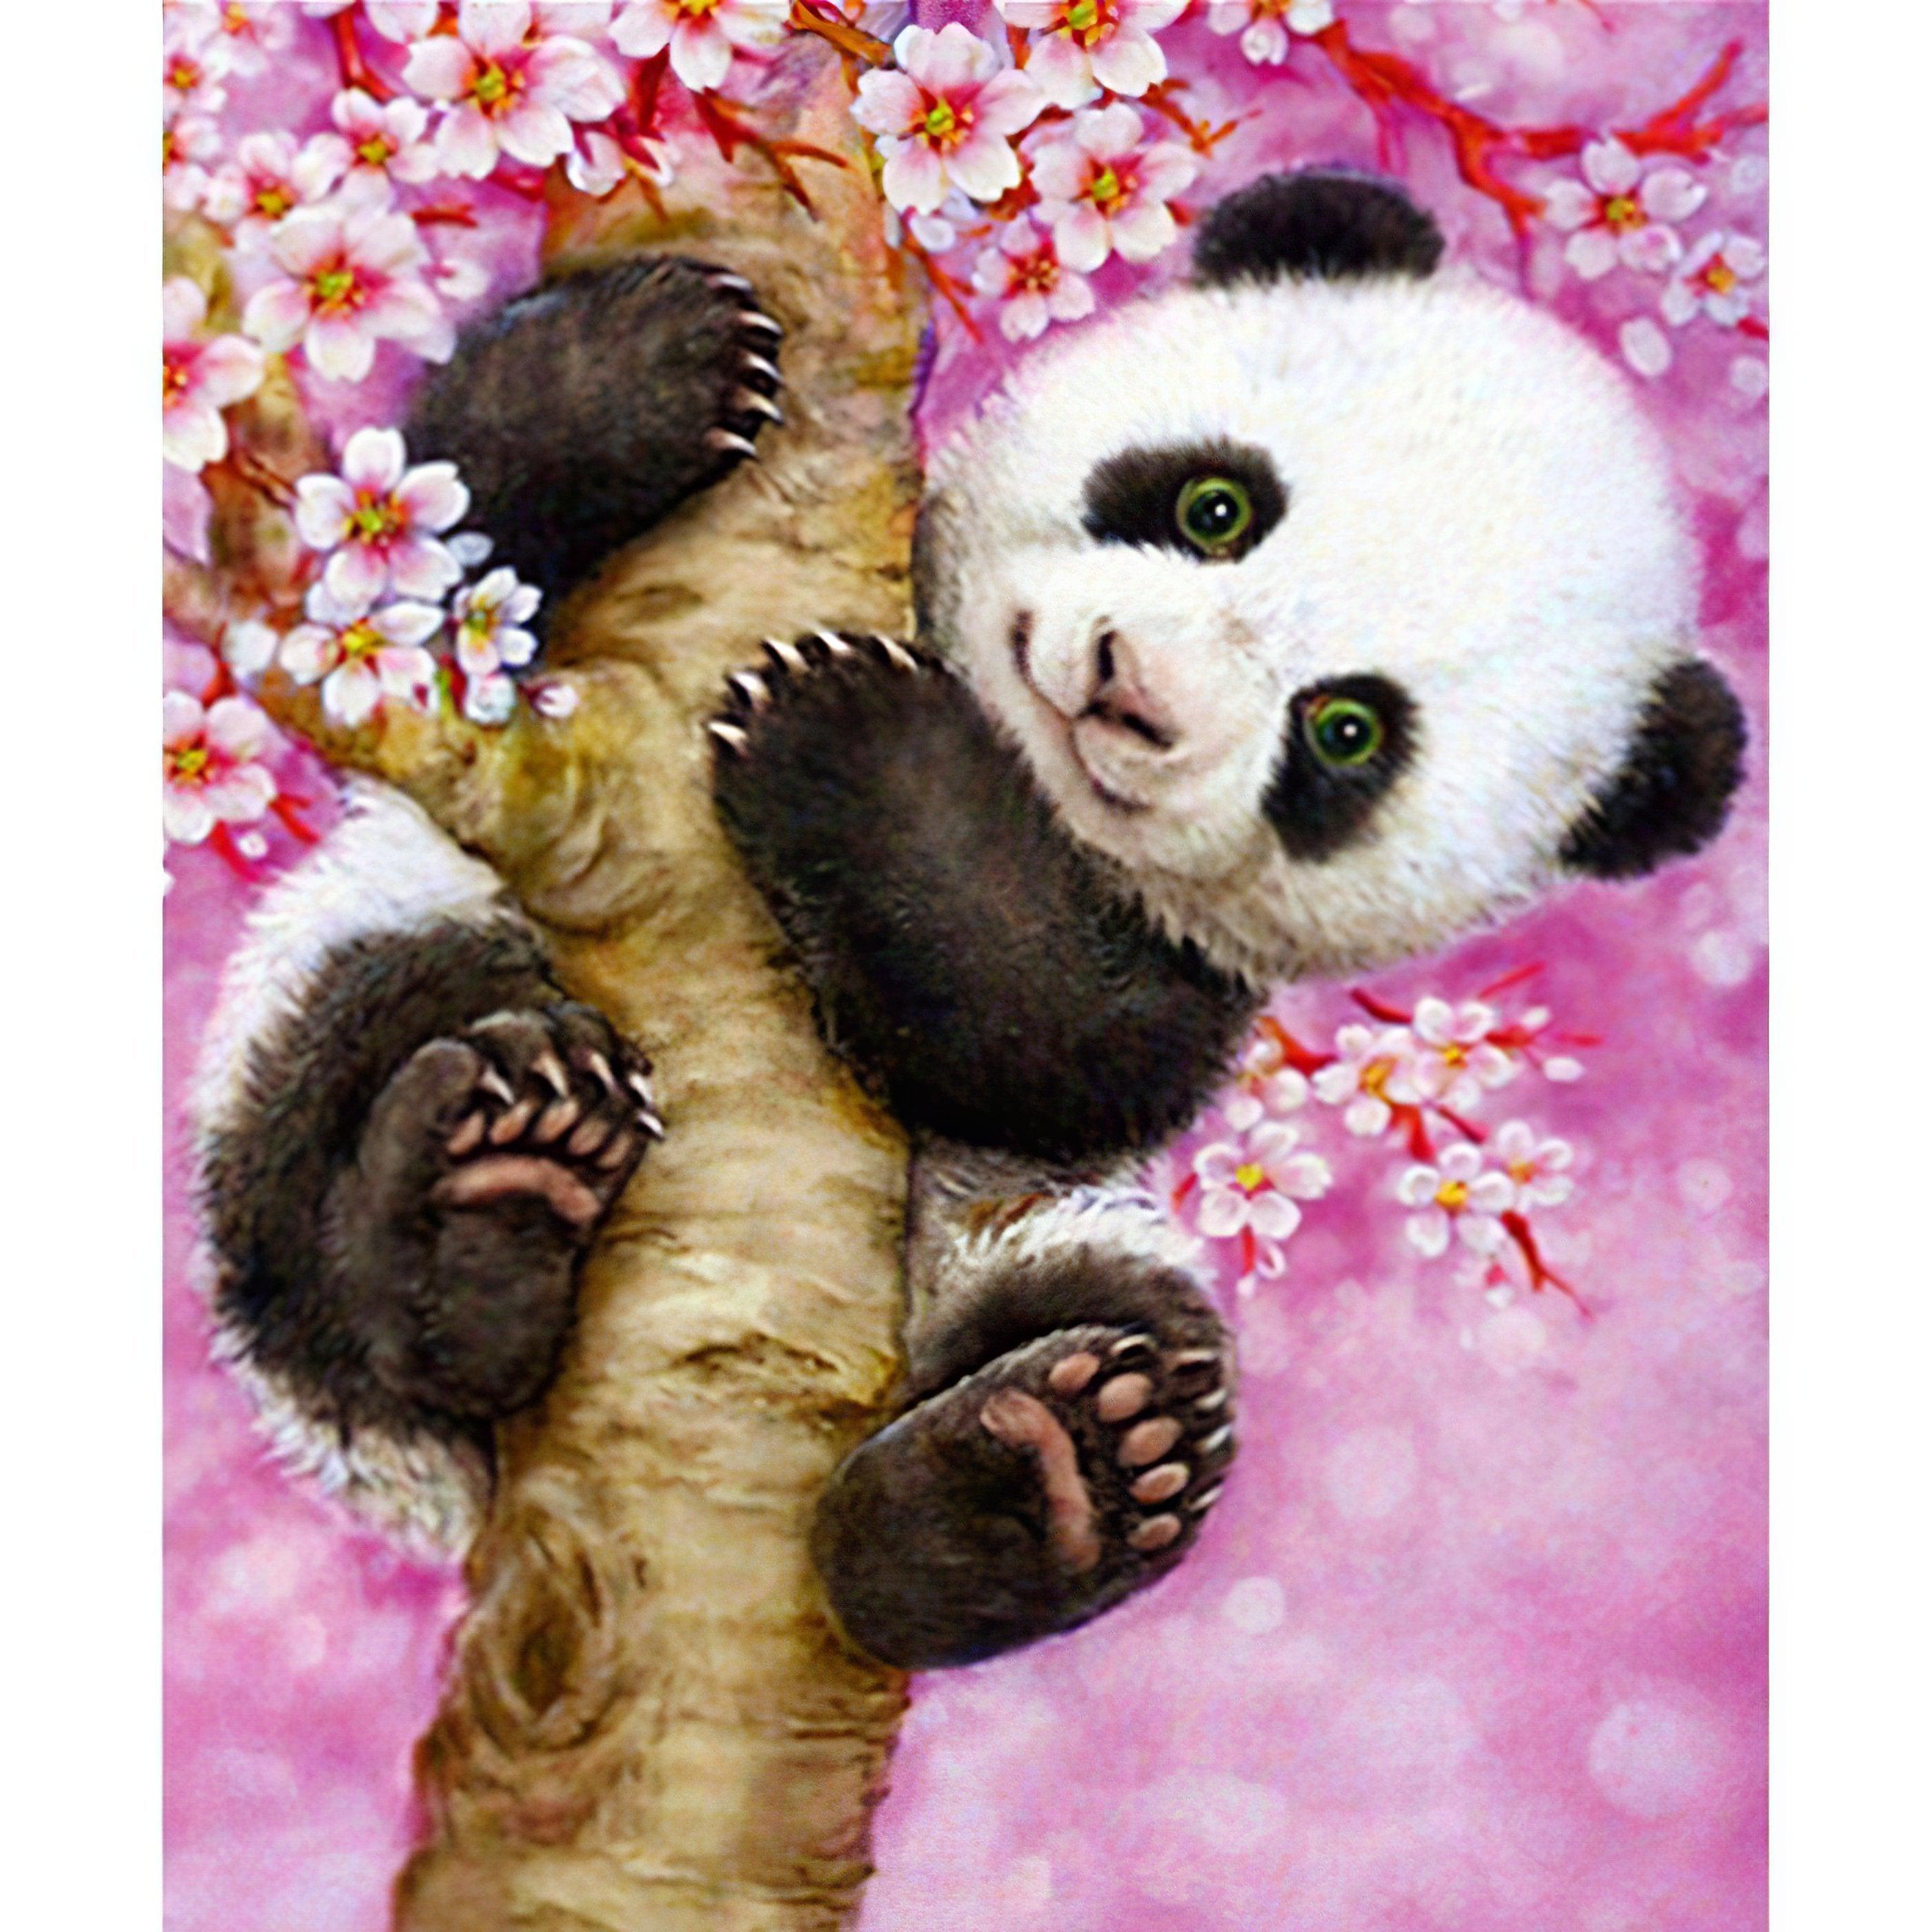 Adorable Cute Panda With Flowers art piece.Cute Panda With Flowers - Diamondartlove